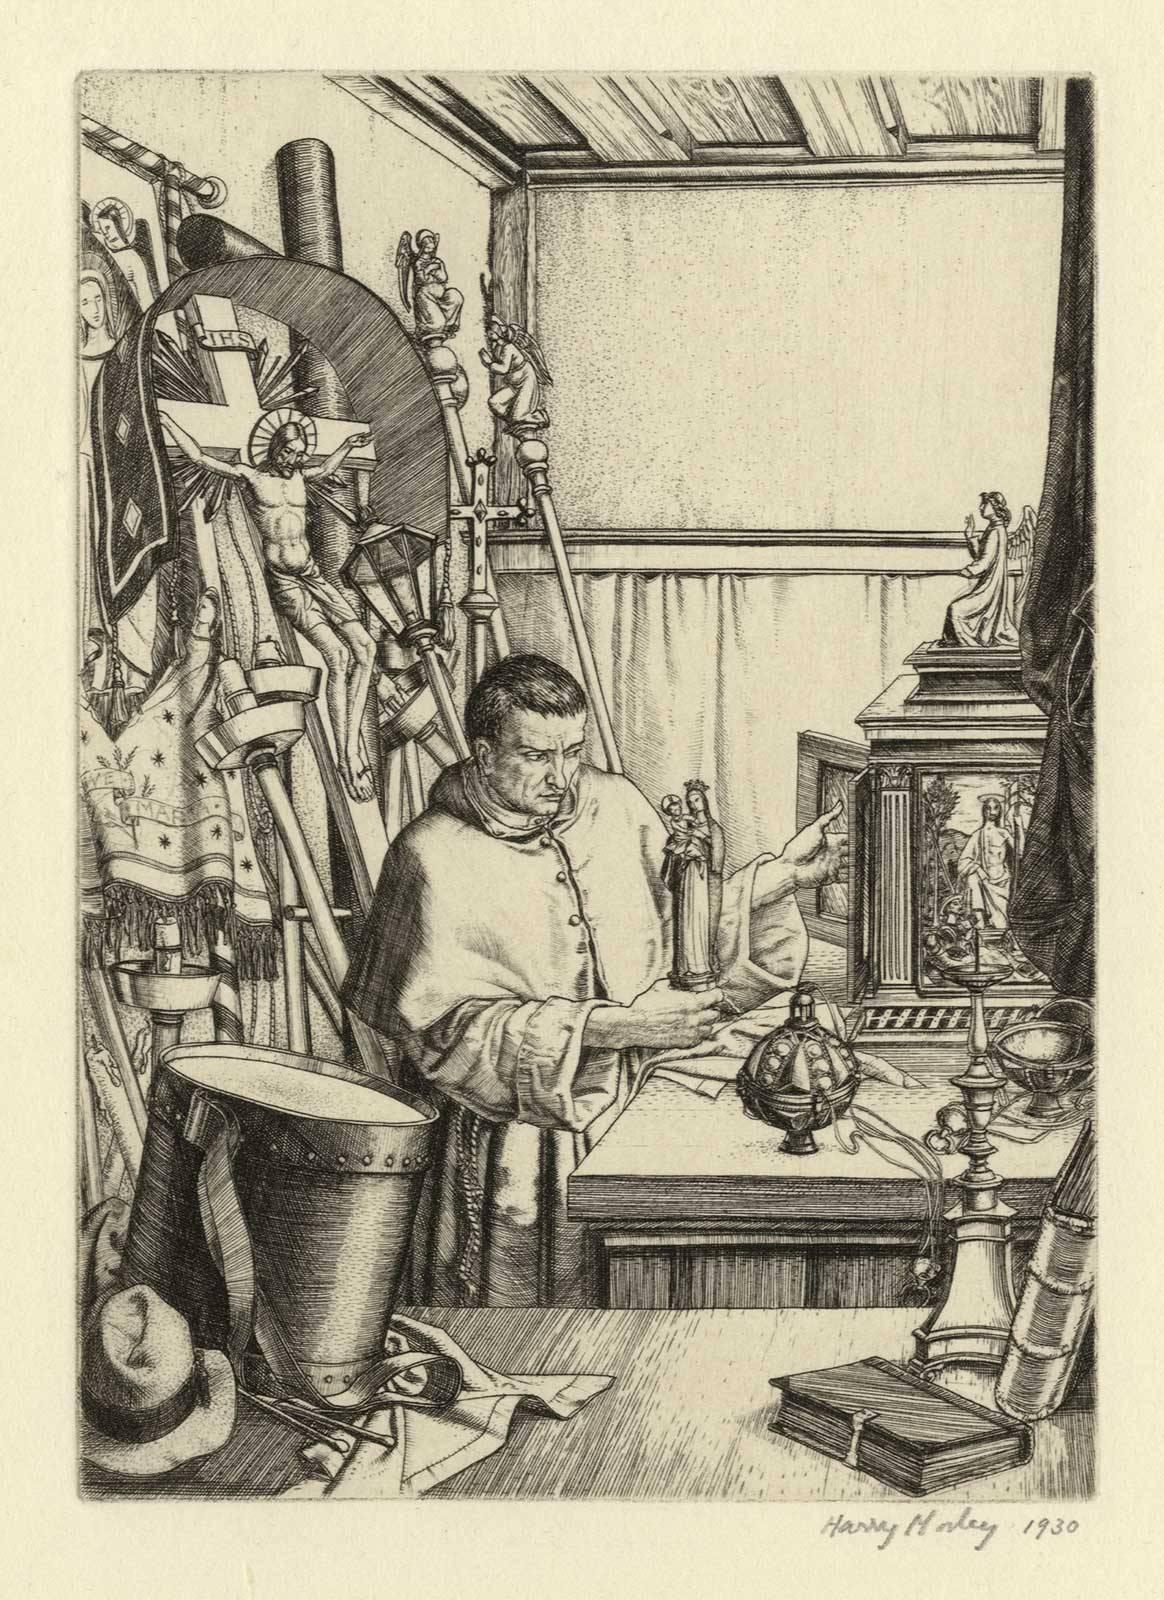 The Sacristan - Modern Print by Harry Morley